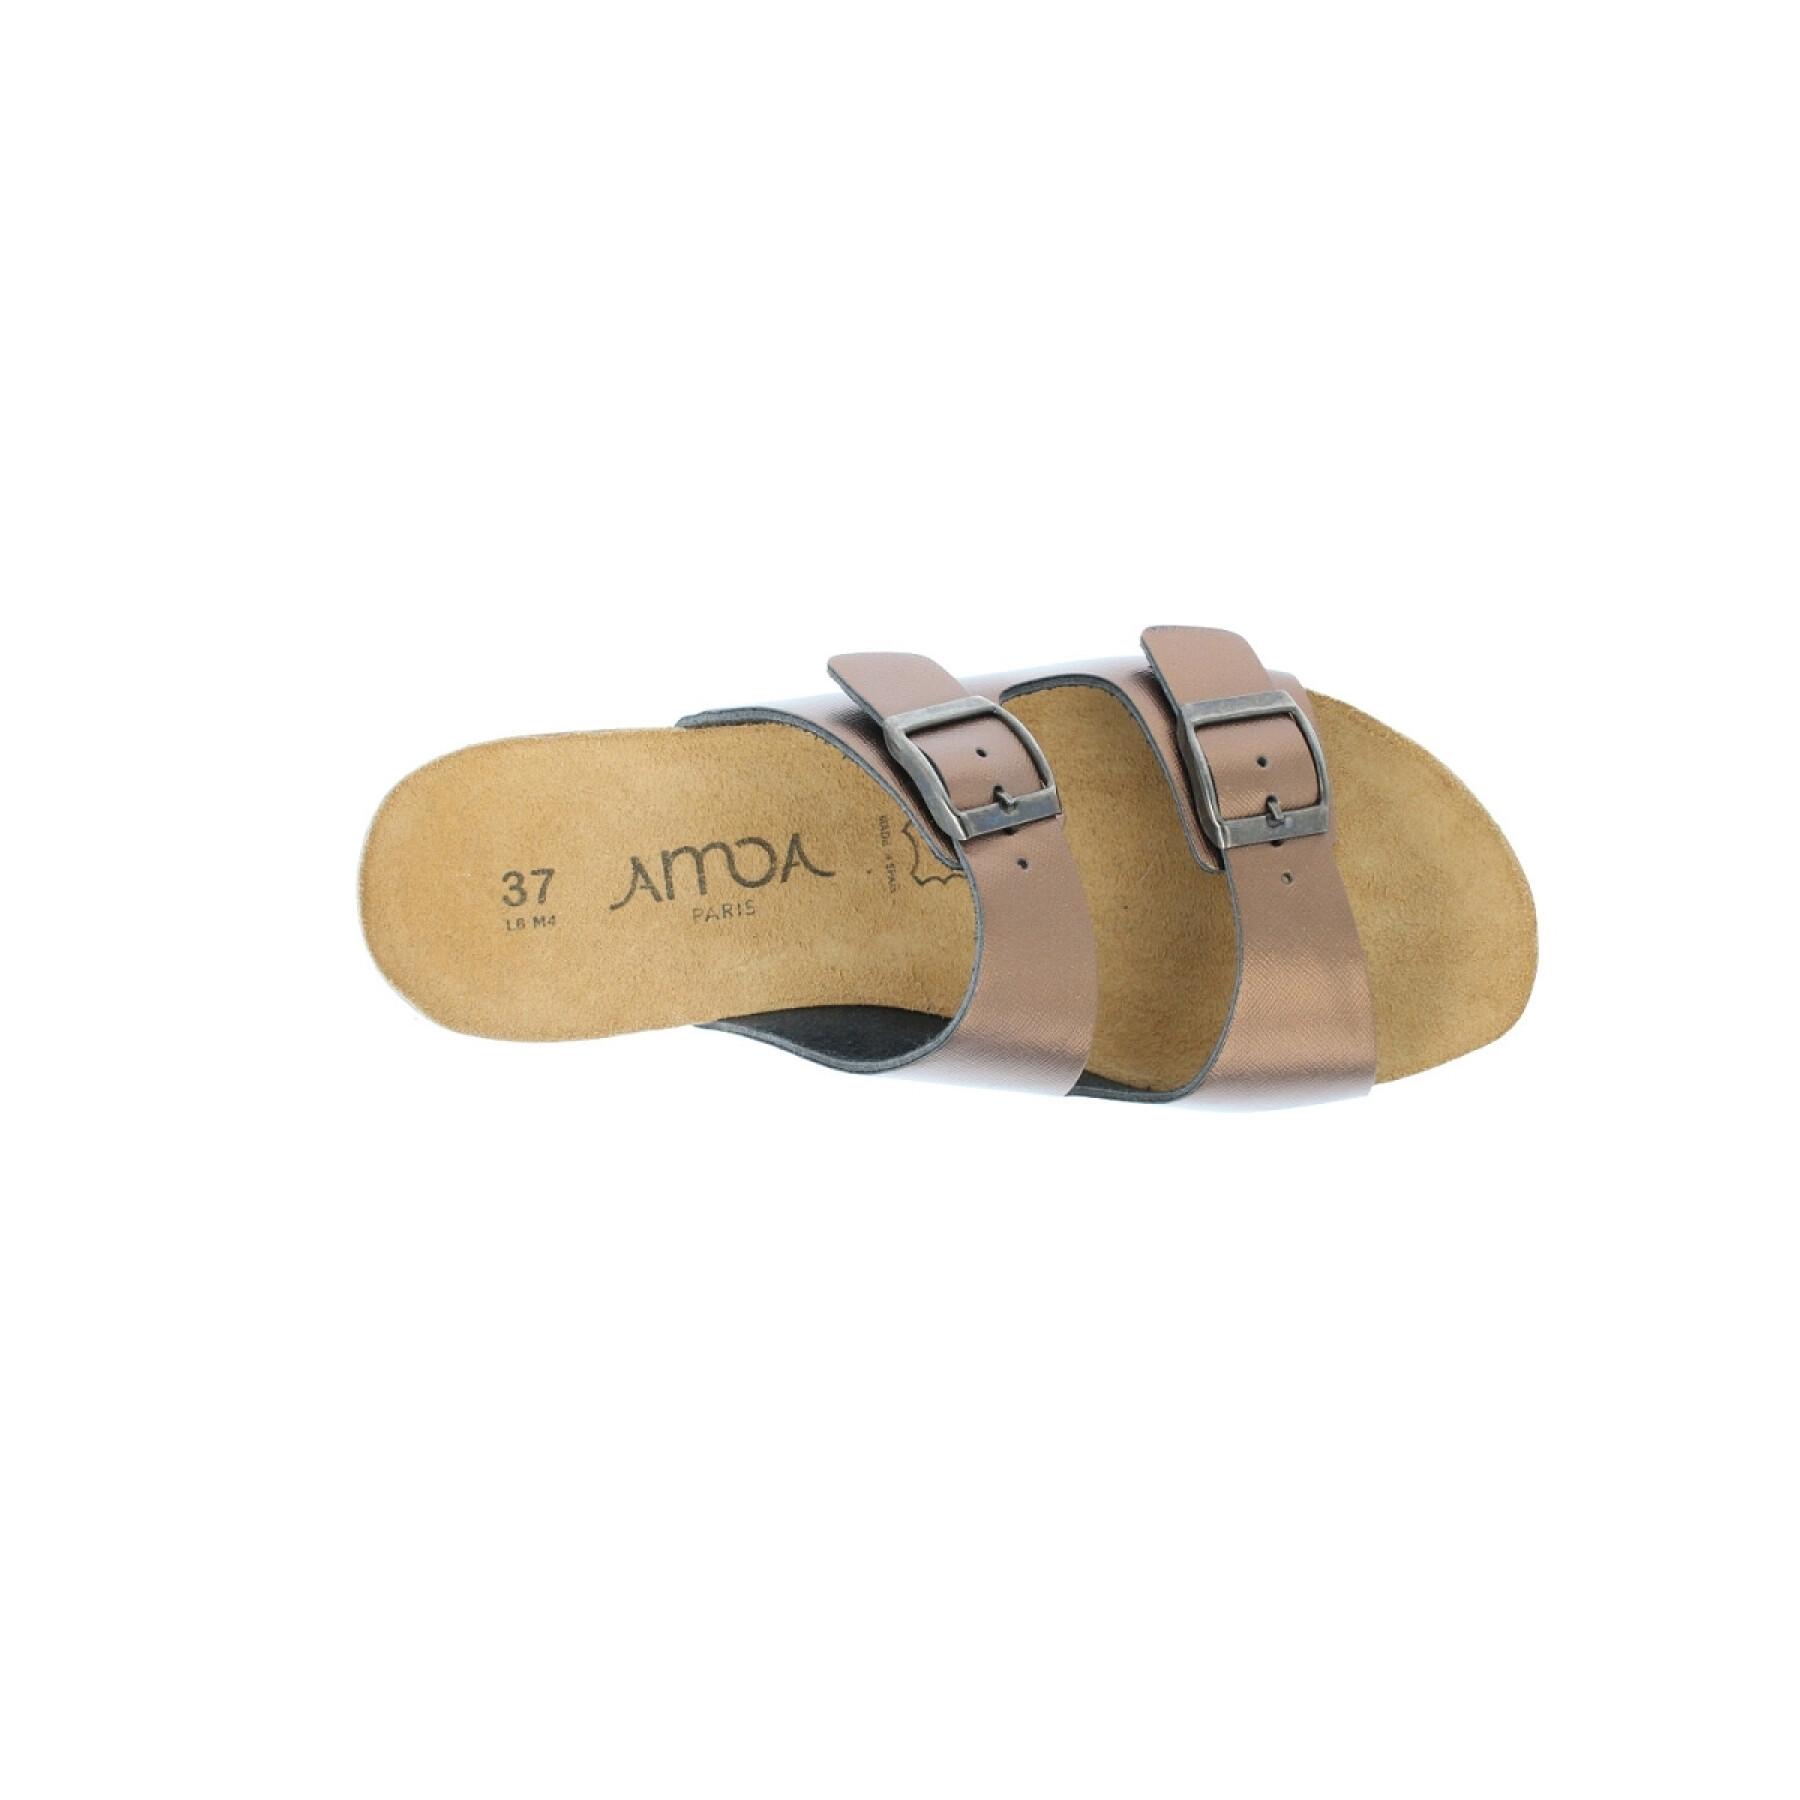 Women's sandals Amoa Borgogna Glitter